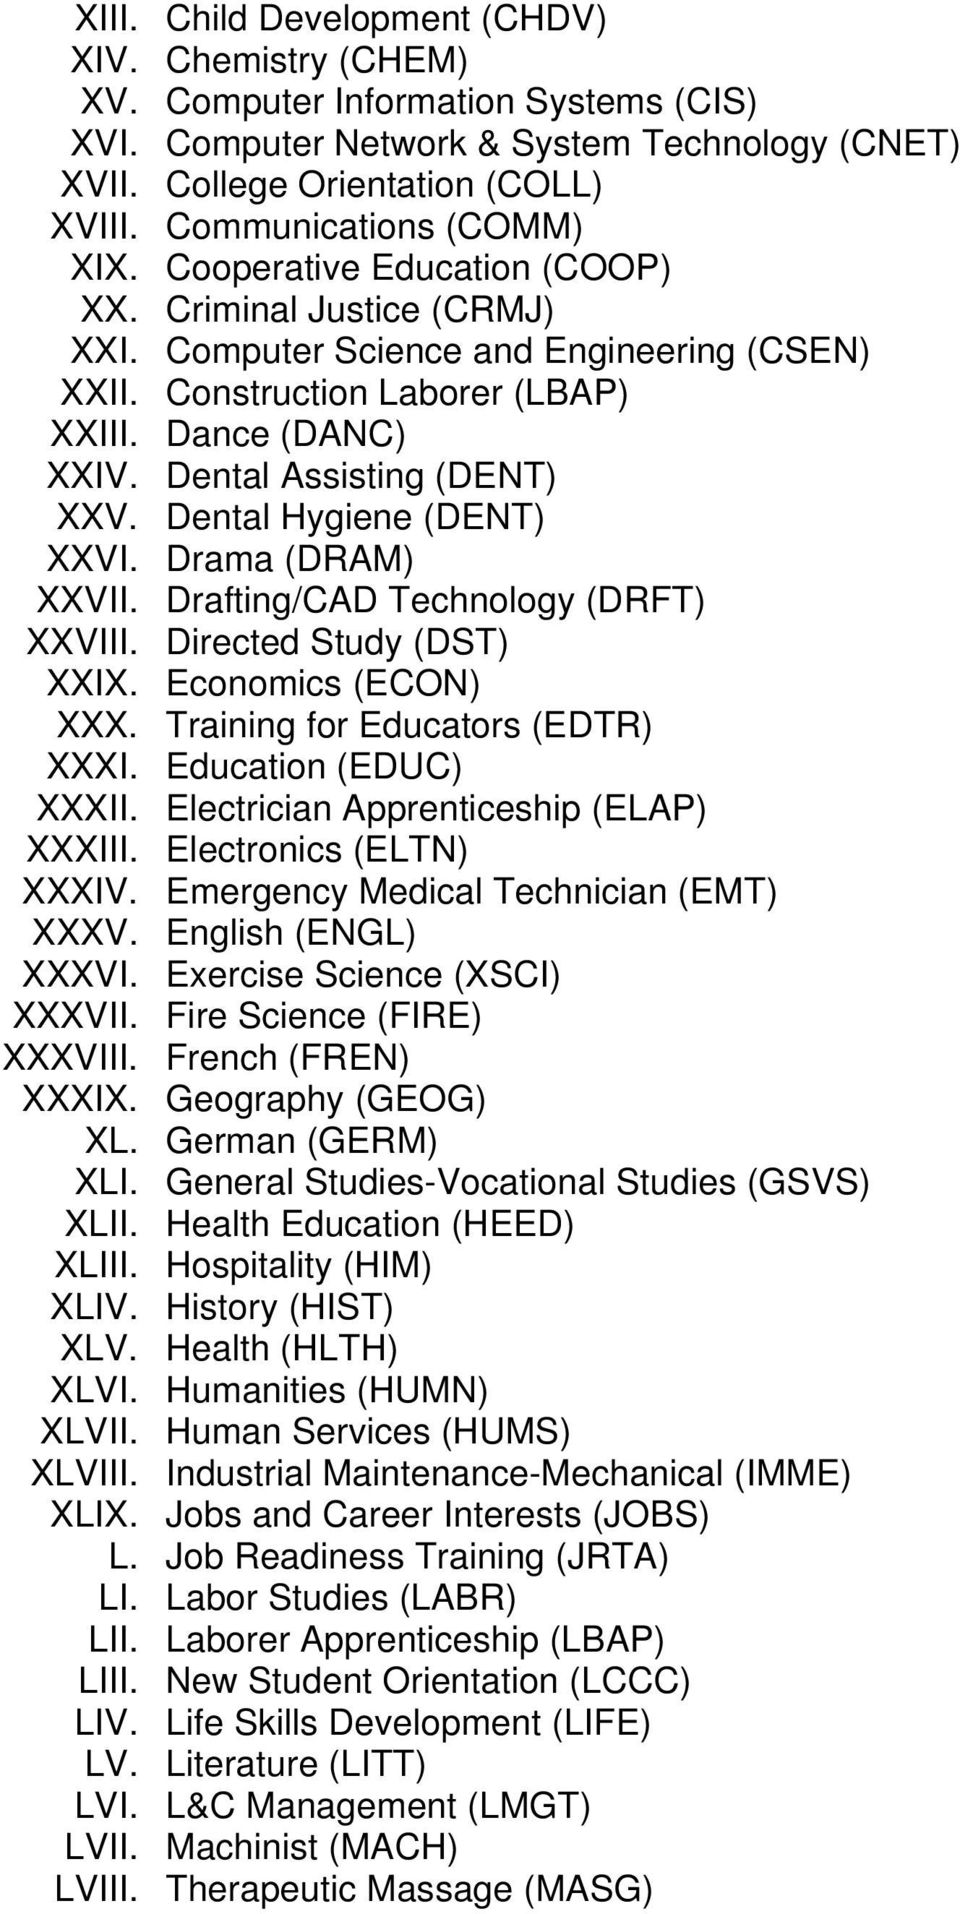 Dental Assisting (DENT) XXV. Dental Hygiene (DENT) XXVI. Drama (DRAM) XXVII. Drafting/CAD Technology (DRFT) XXVIII. Directed Study (DST) XXIX. Economics (ECON) XXX. Training for Educators (EDTR) XXXI.